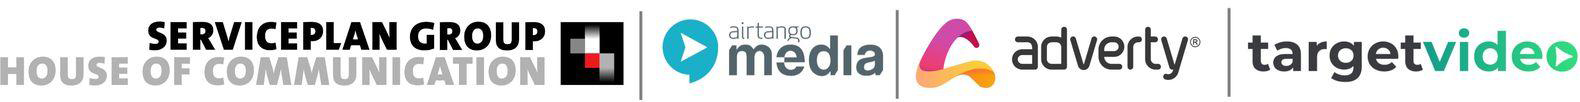 Media Works After 5 Vol. 6 Partner Logos: Serviceplan Group, Airtango Media, Adverty, Target Video